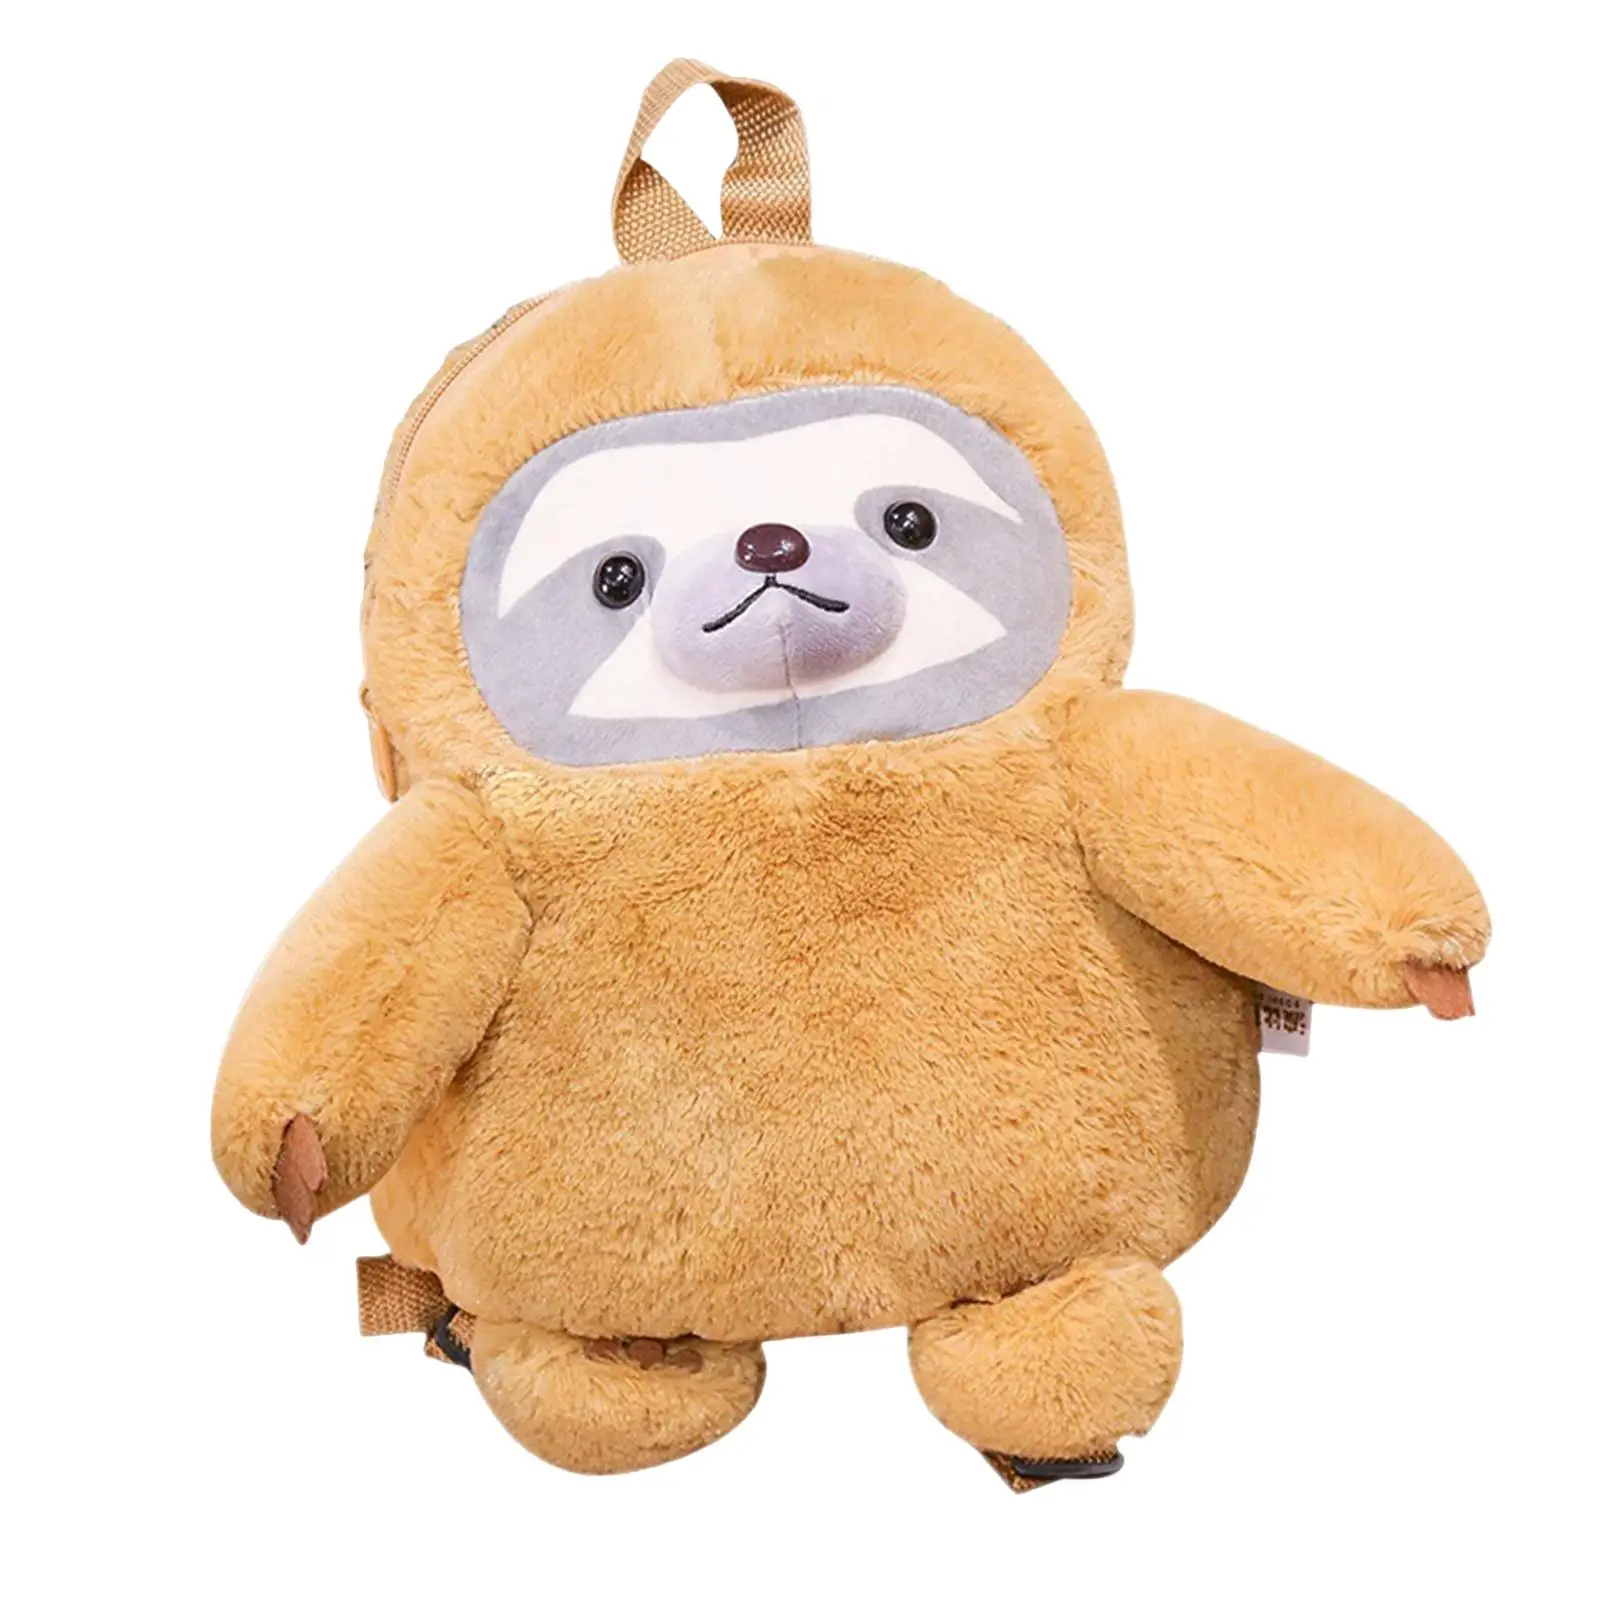 Sloth Backpack Animals Rucksack Creative Handbag for Kids Boys Girls Gifts